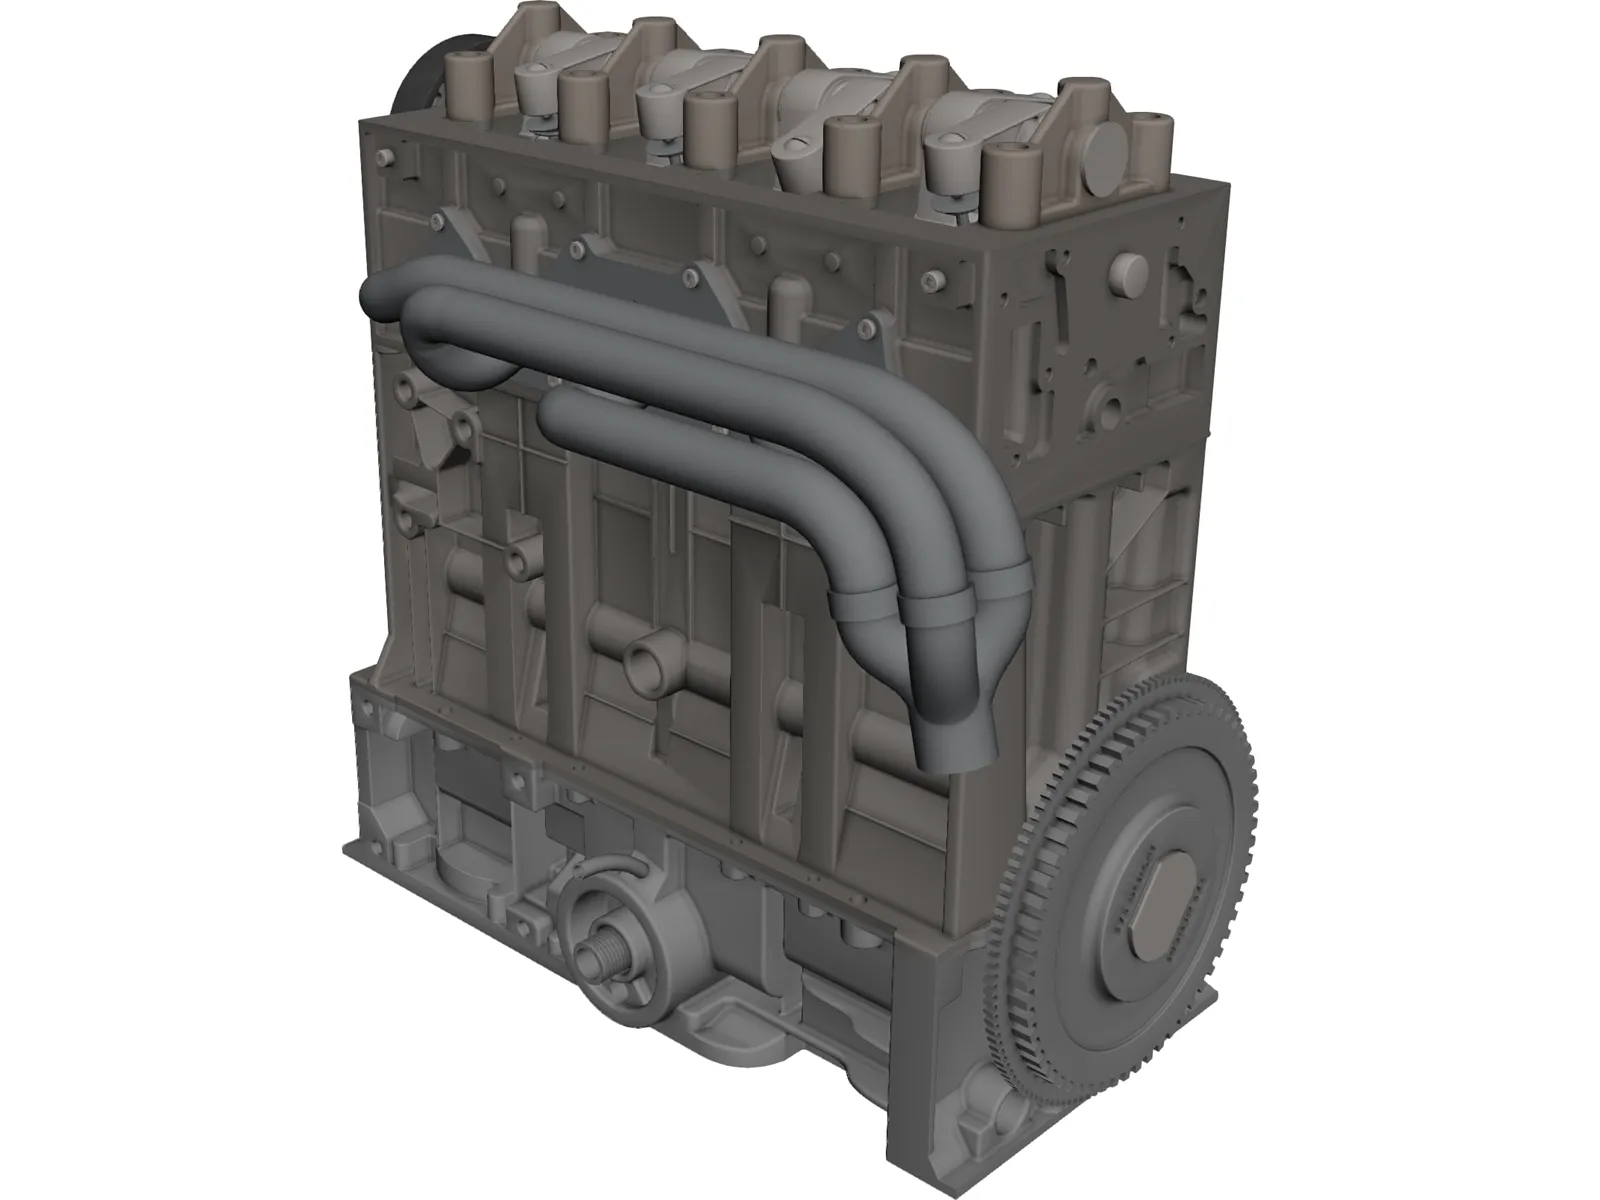 Citroen/Peugeot Engine 3D Model